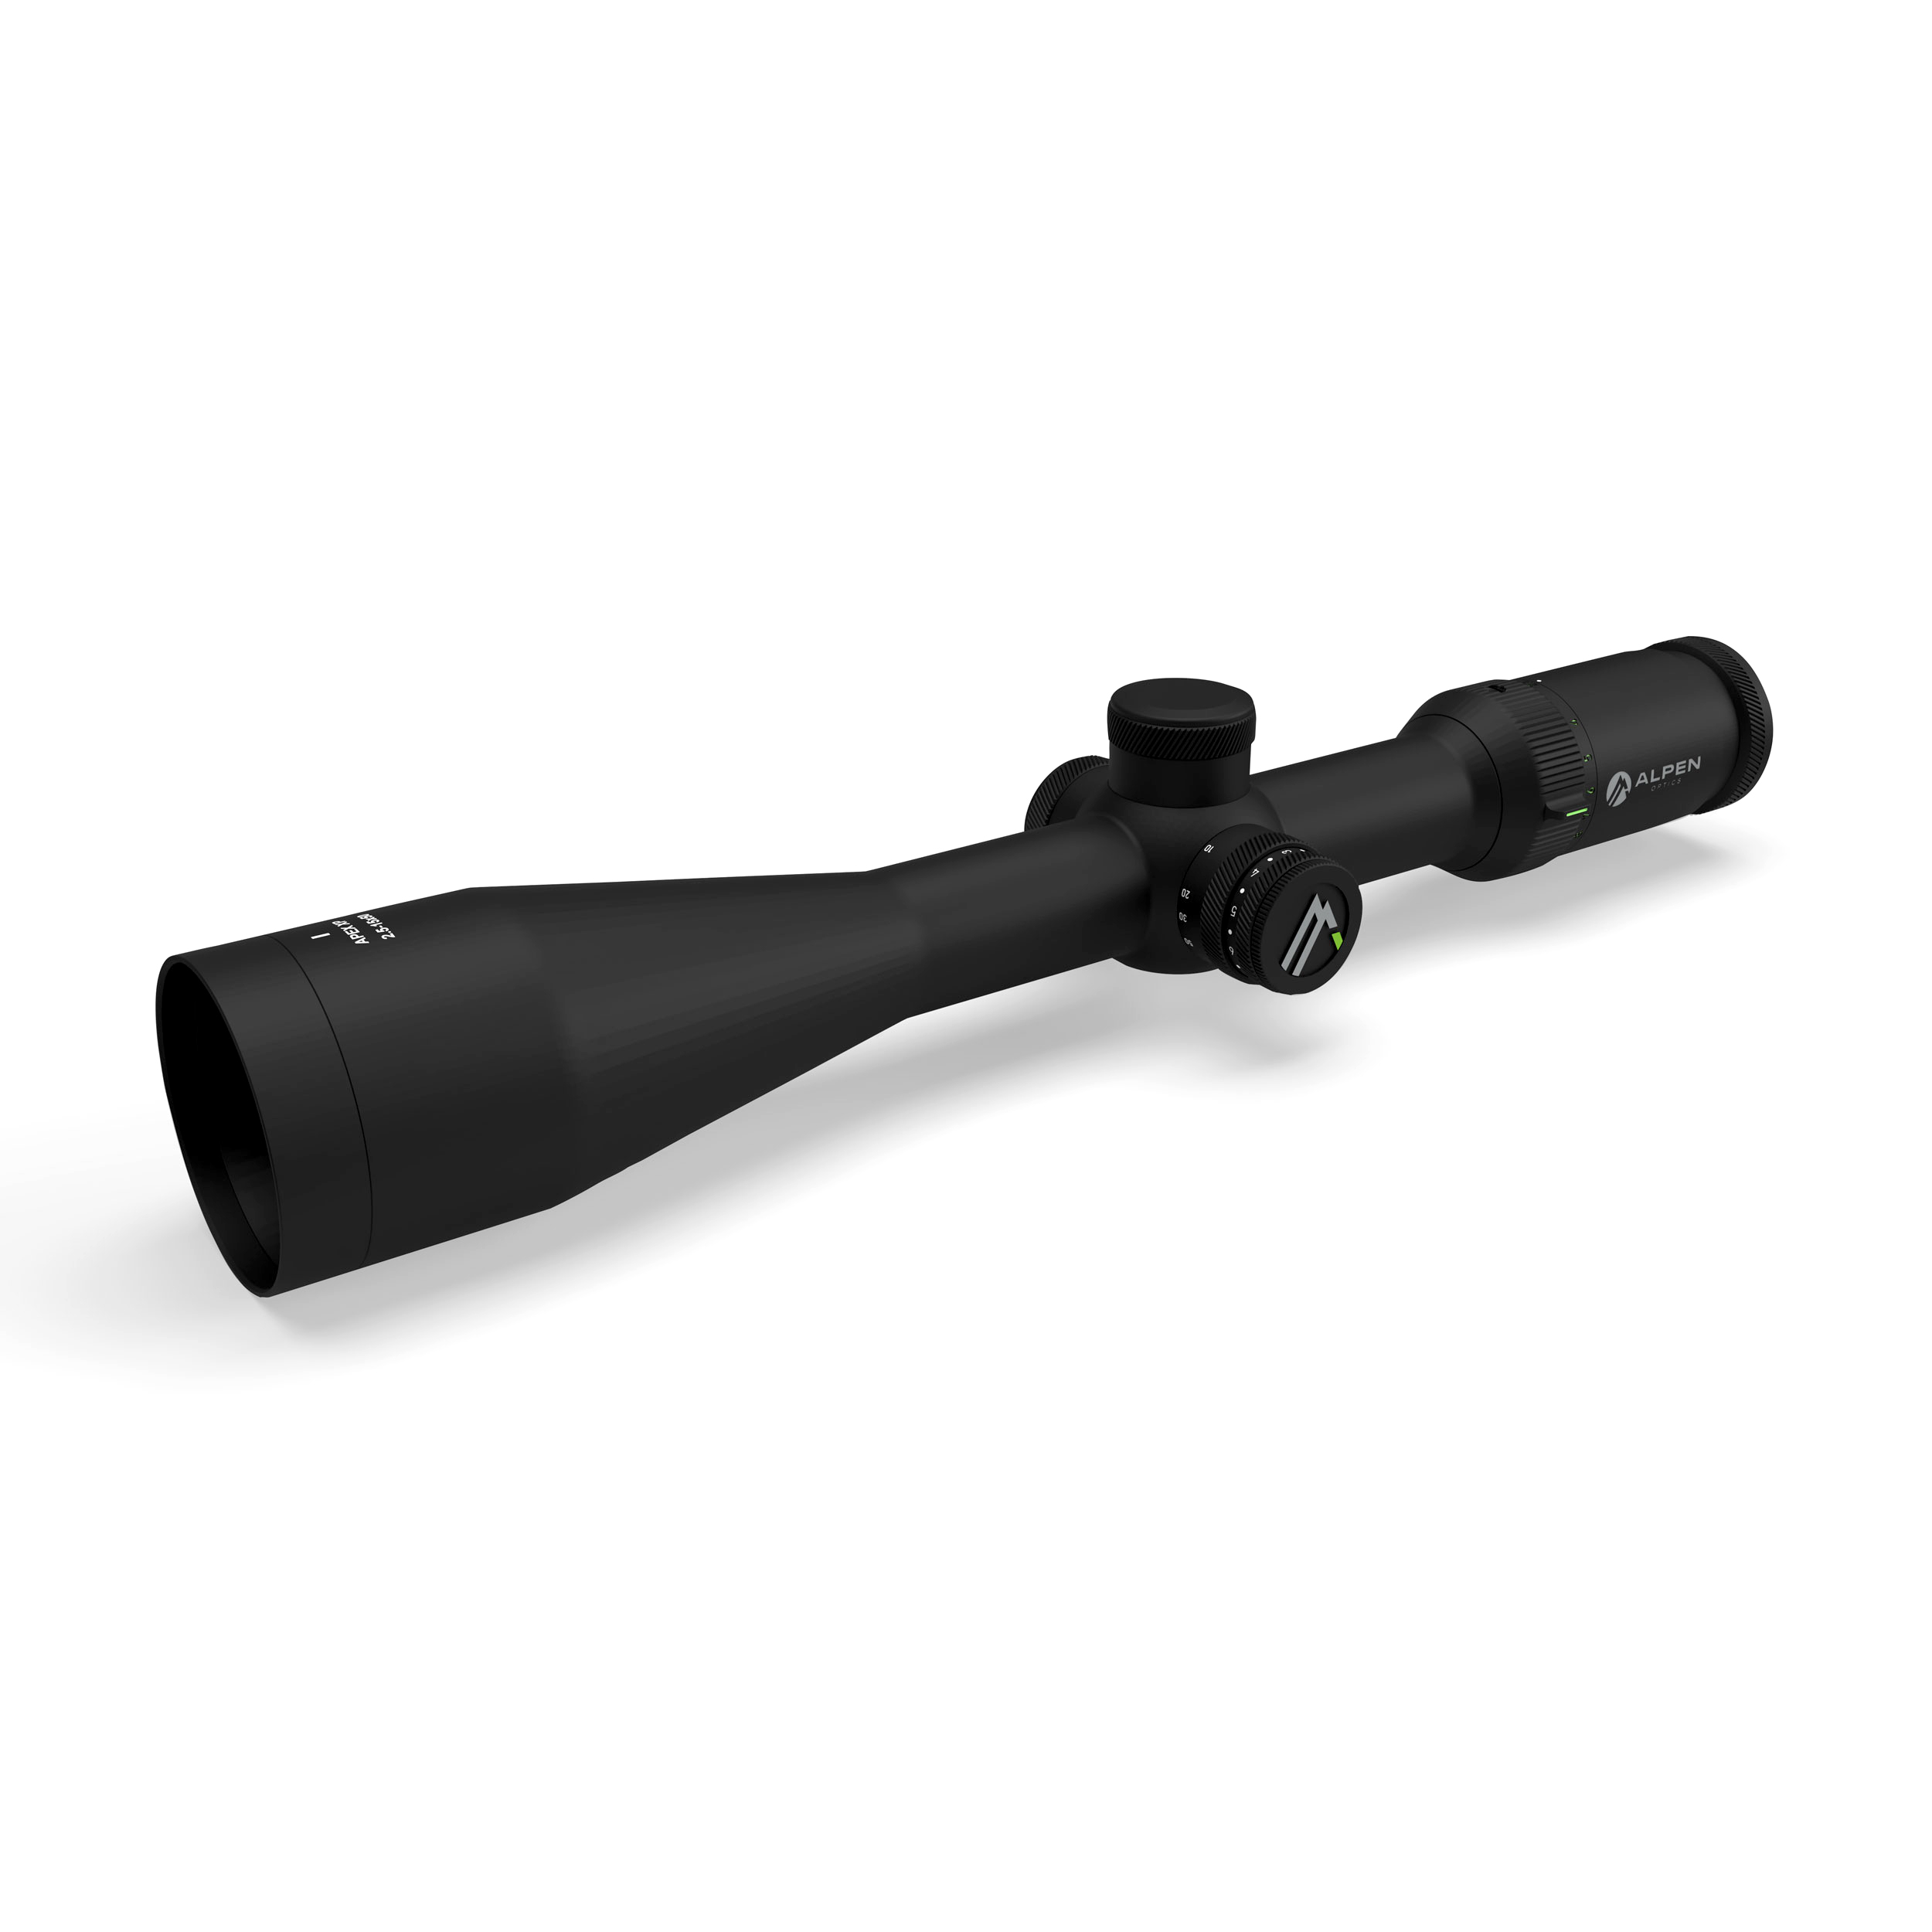 ALPEN OPTICS Apex XP 2.5-15x50 A4 riflescope with SmartDot technology